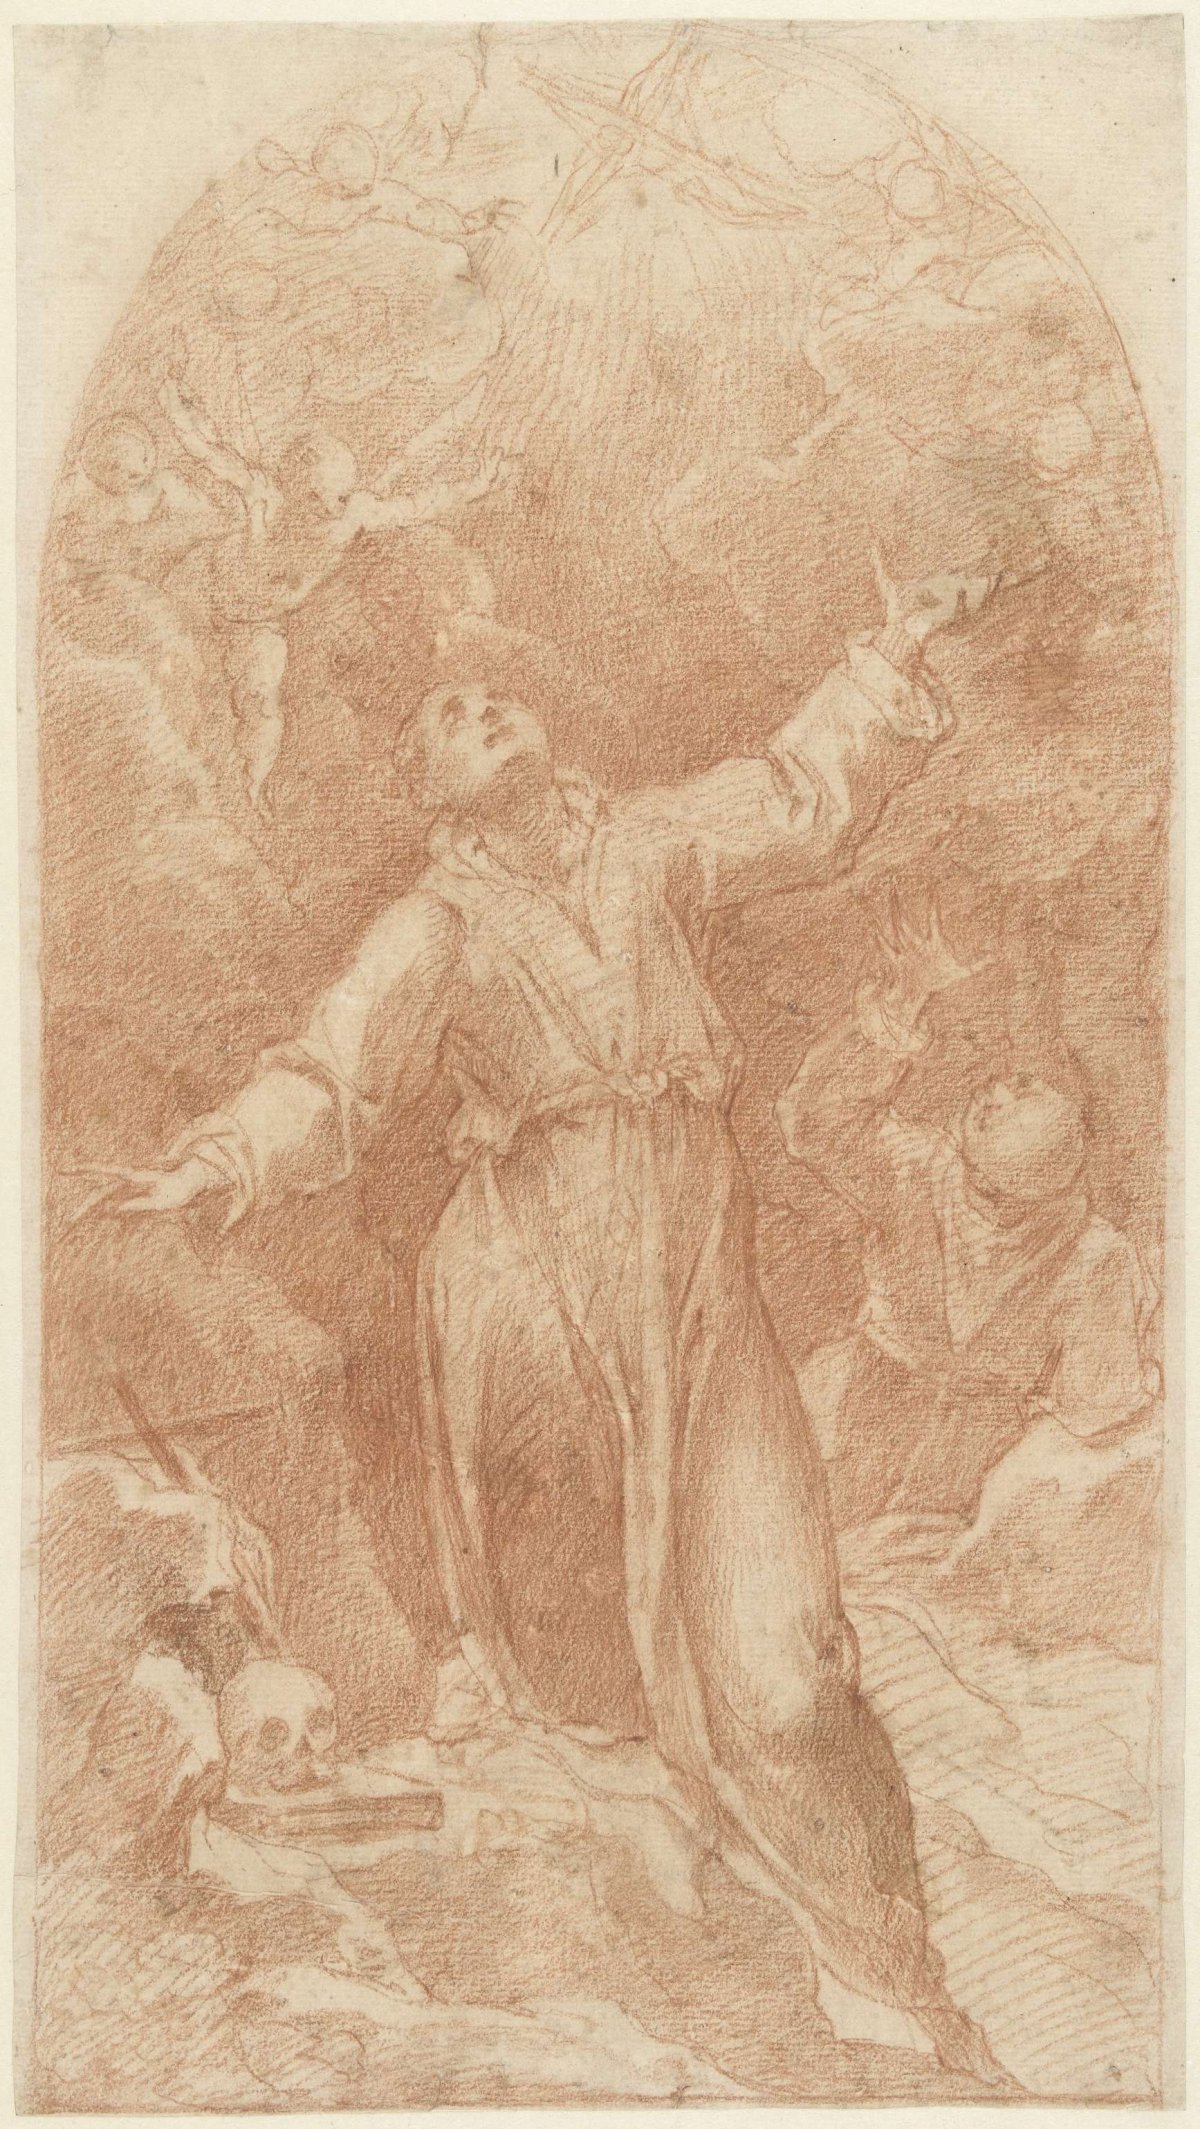 Stigmatization of Francis of Assisi, Cristoforo Pomarancio, 1600 - 1626